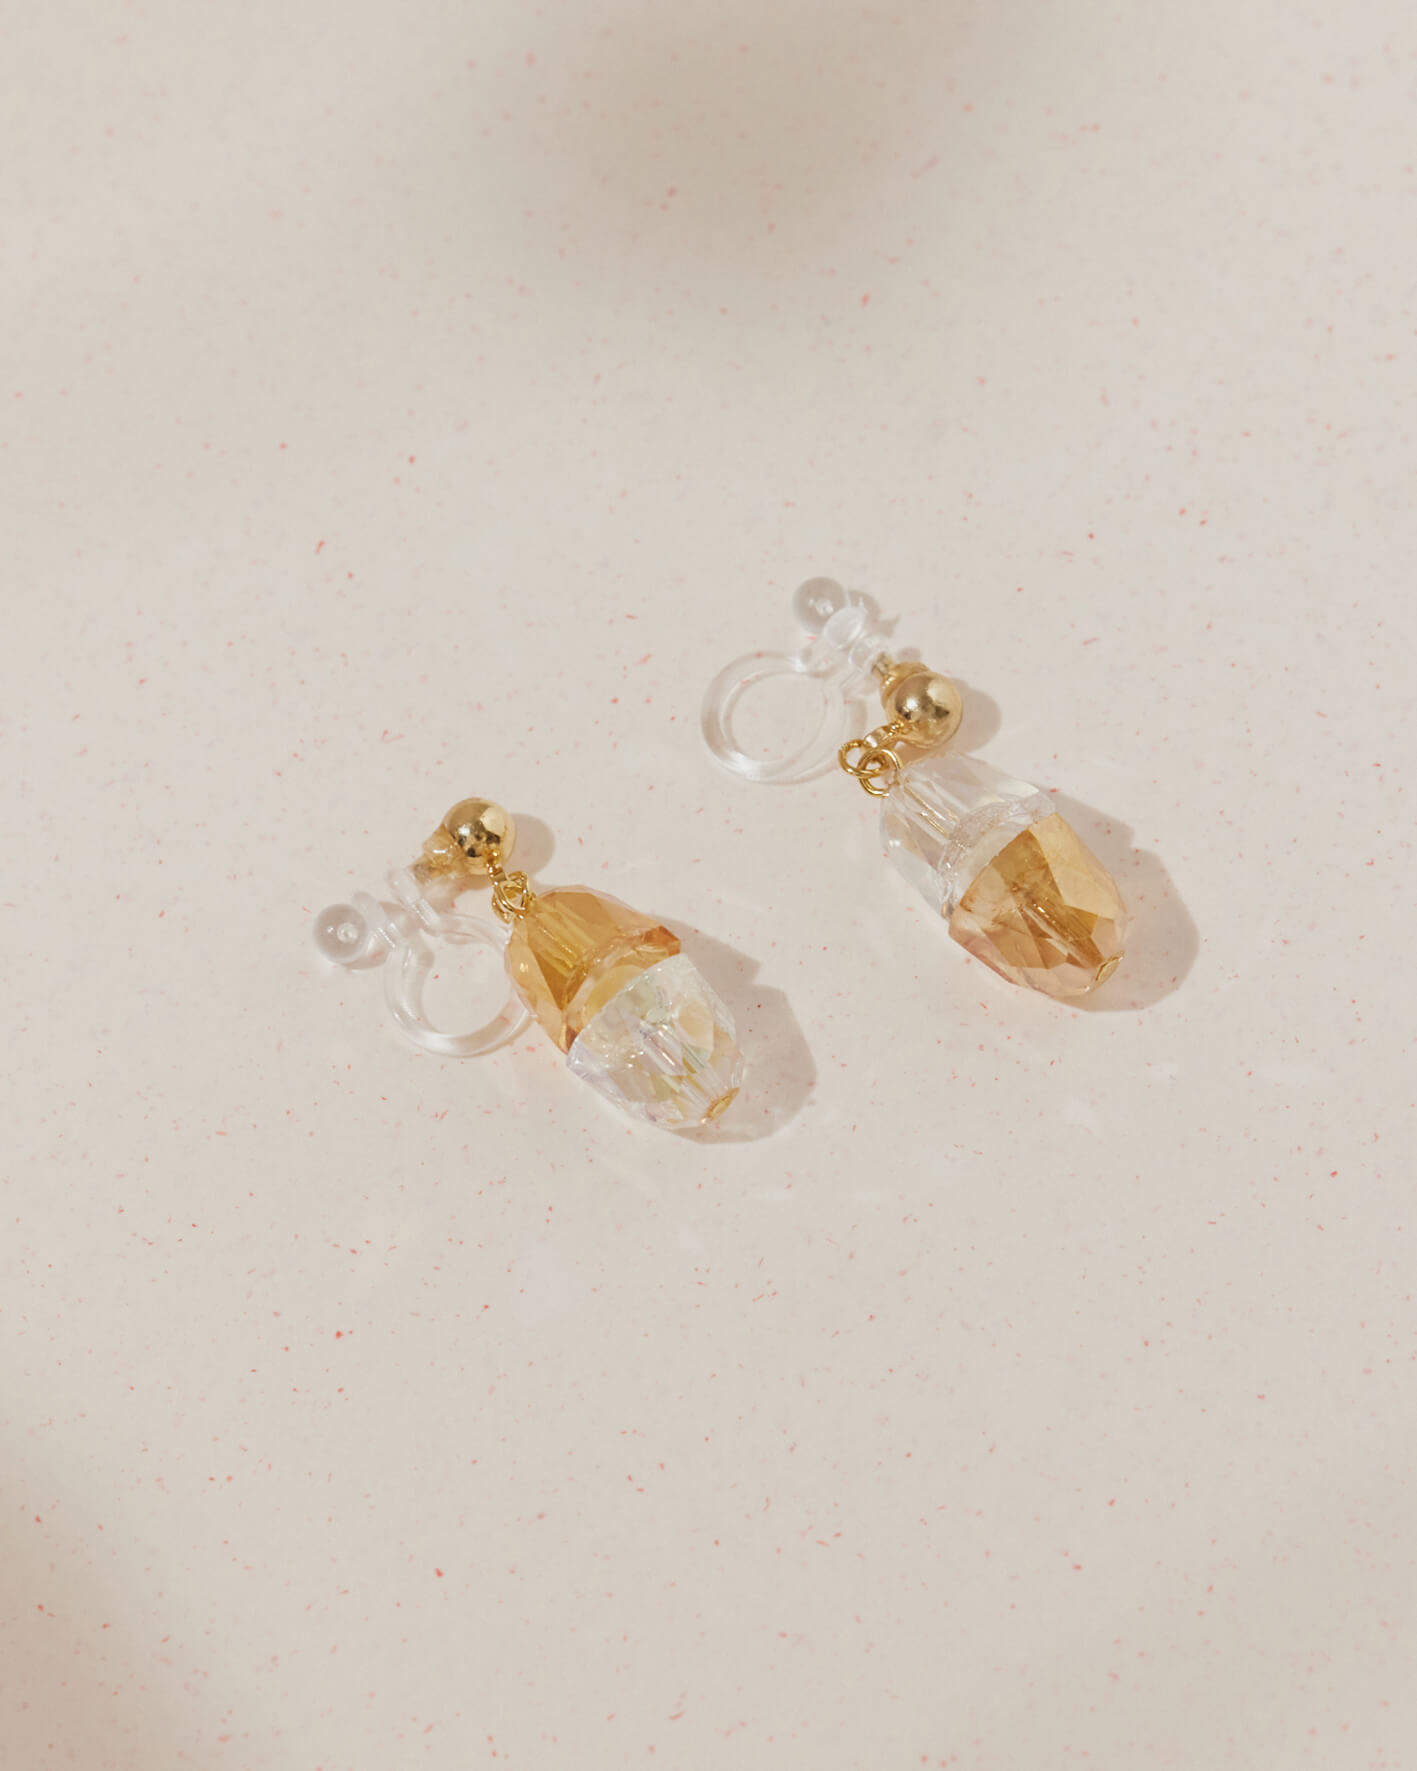 Eco安珂,韓國飾品,韓國耳環,耳針式耳環,矽膠夾耳環,透明耳夾耳環,無痛耳夾耳環,膠囊耳環